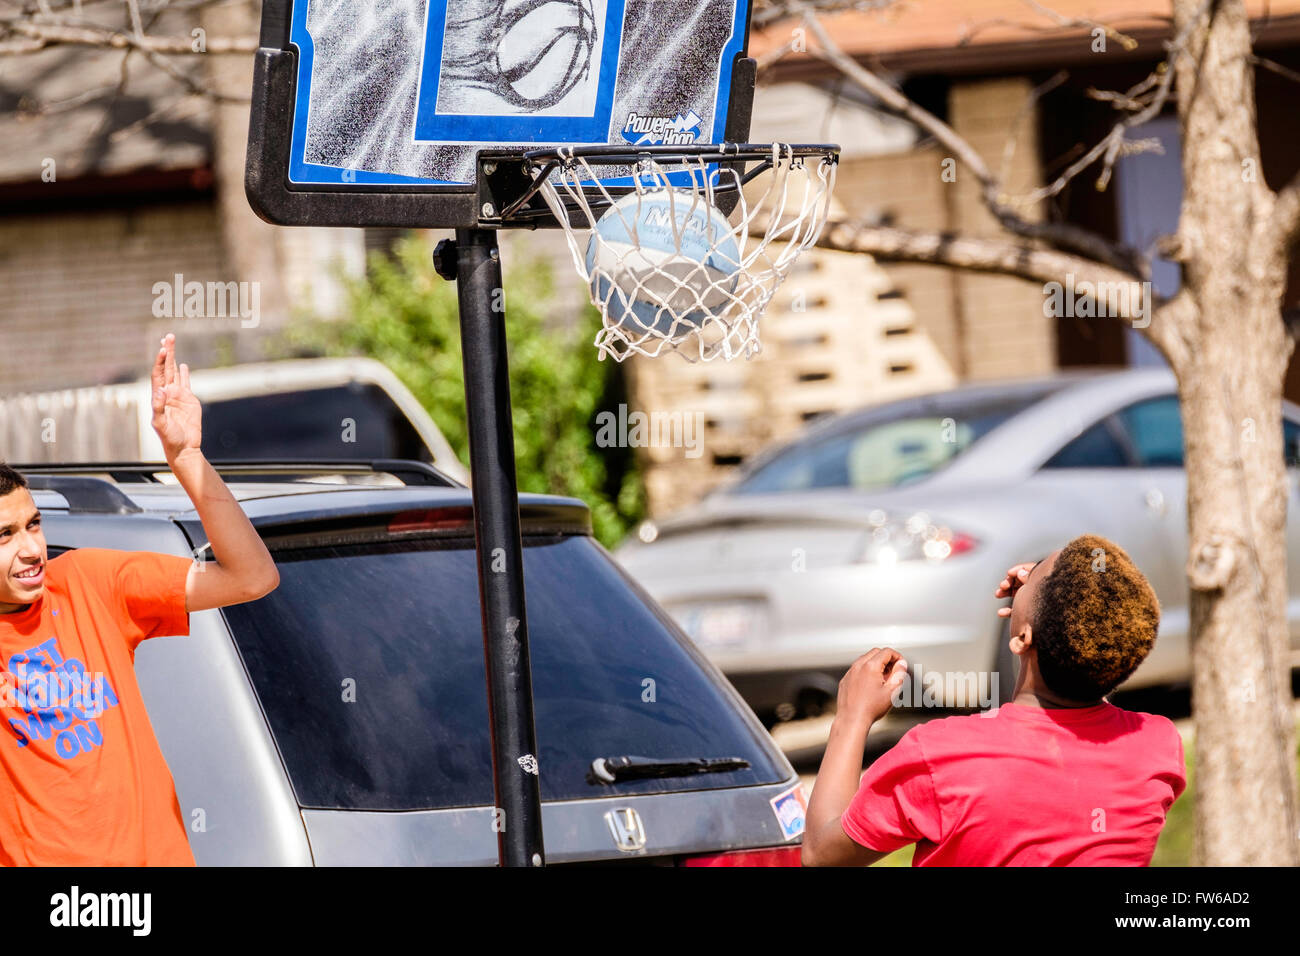 Teen and pre-teen boys gather and play basketball on the street in Oklahoma City, Oklahoma, USA. Stock Photo